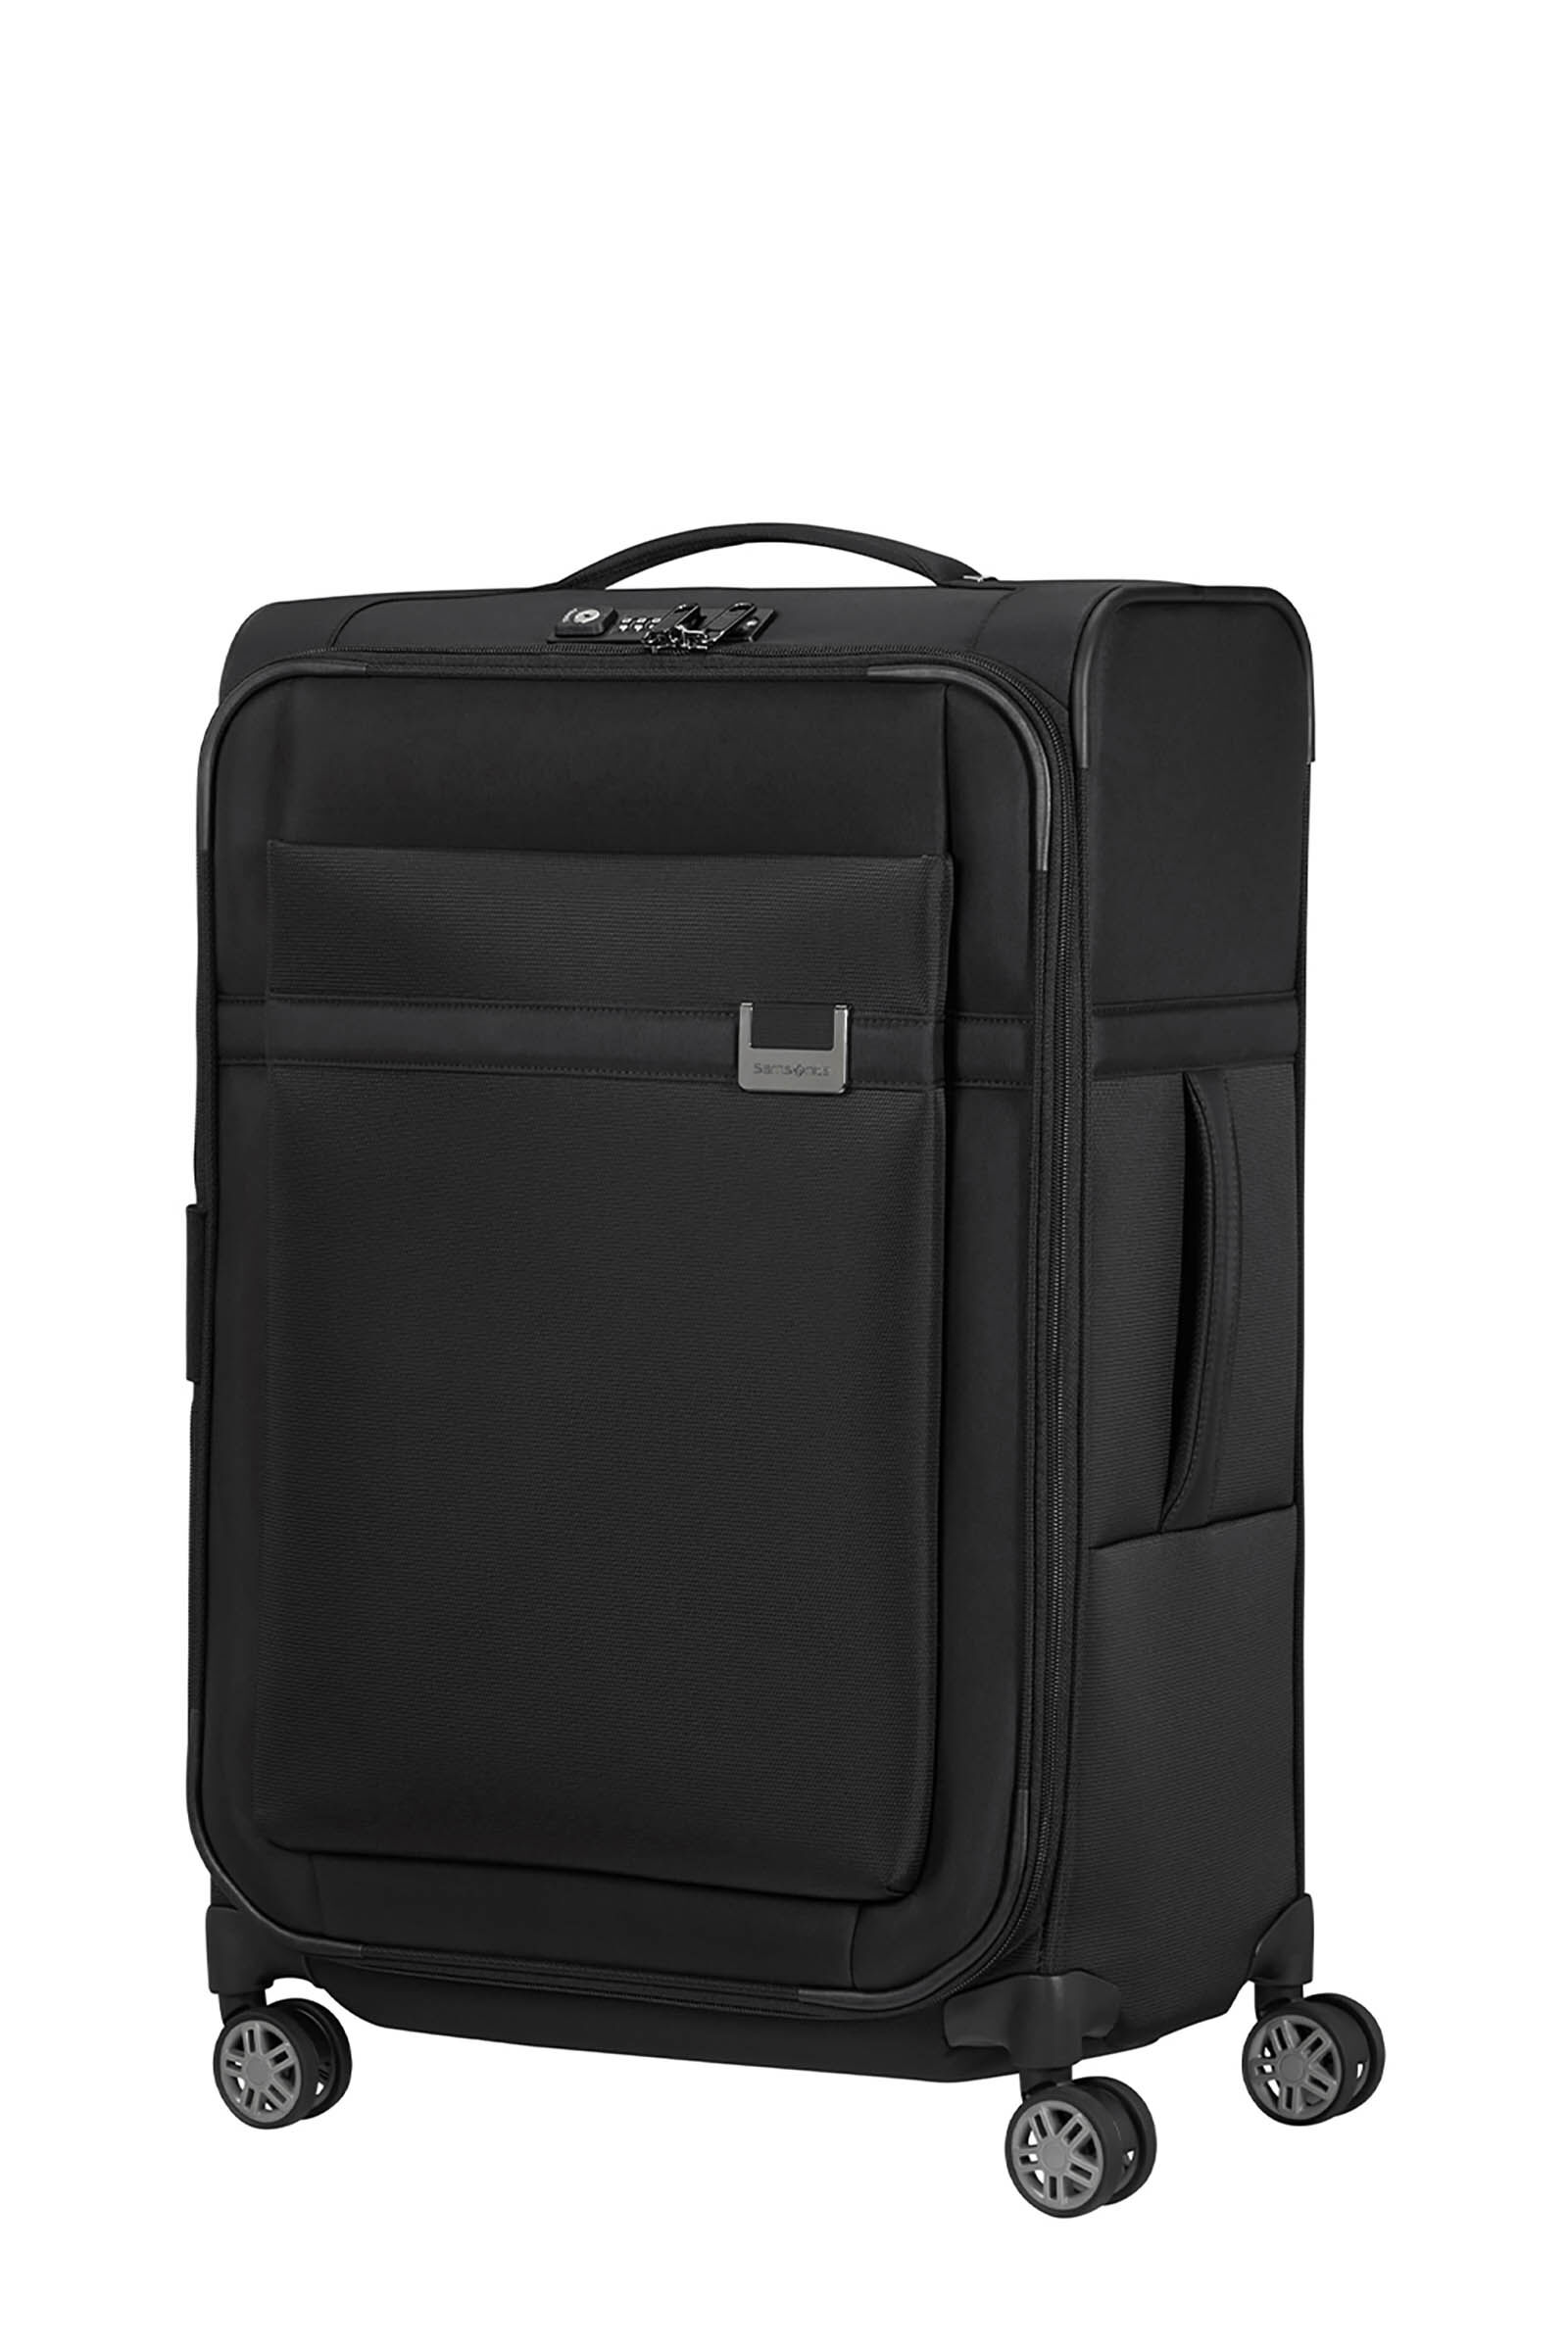 Samsonite サムソナイト スーツケース キャリーバッグ 2個セット 黒色